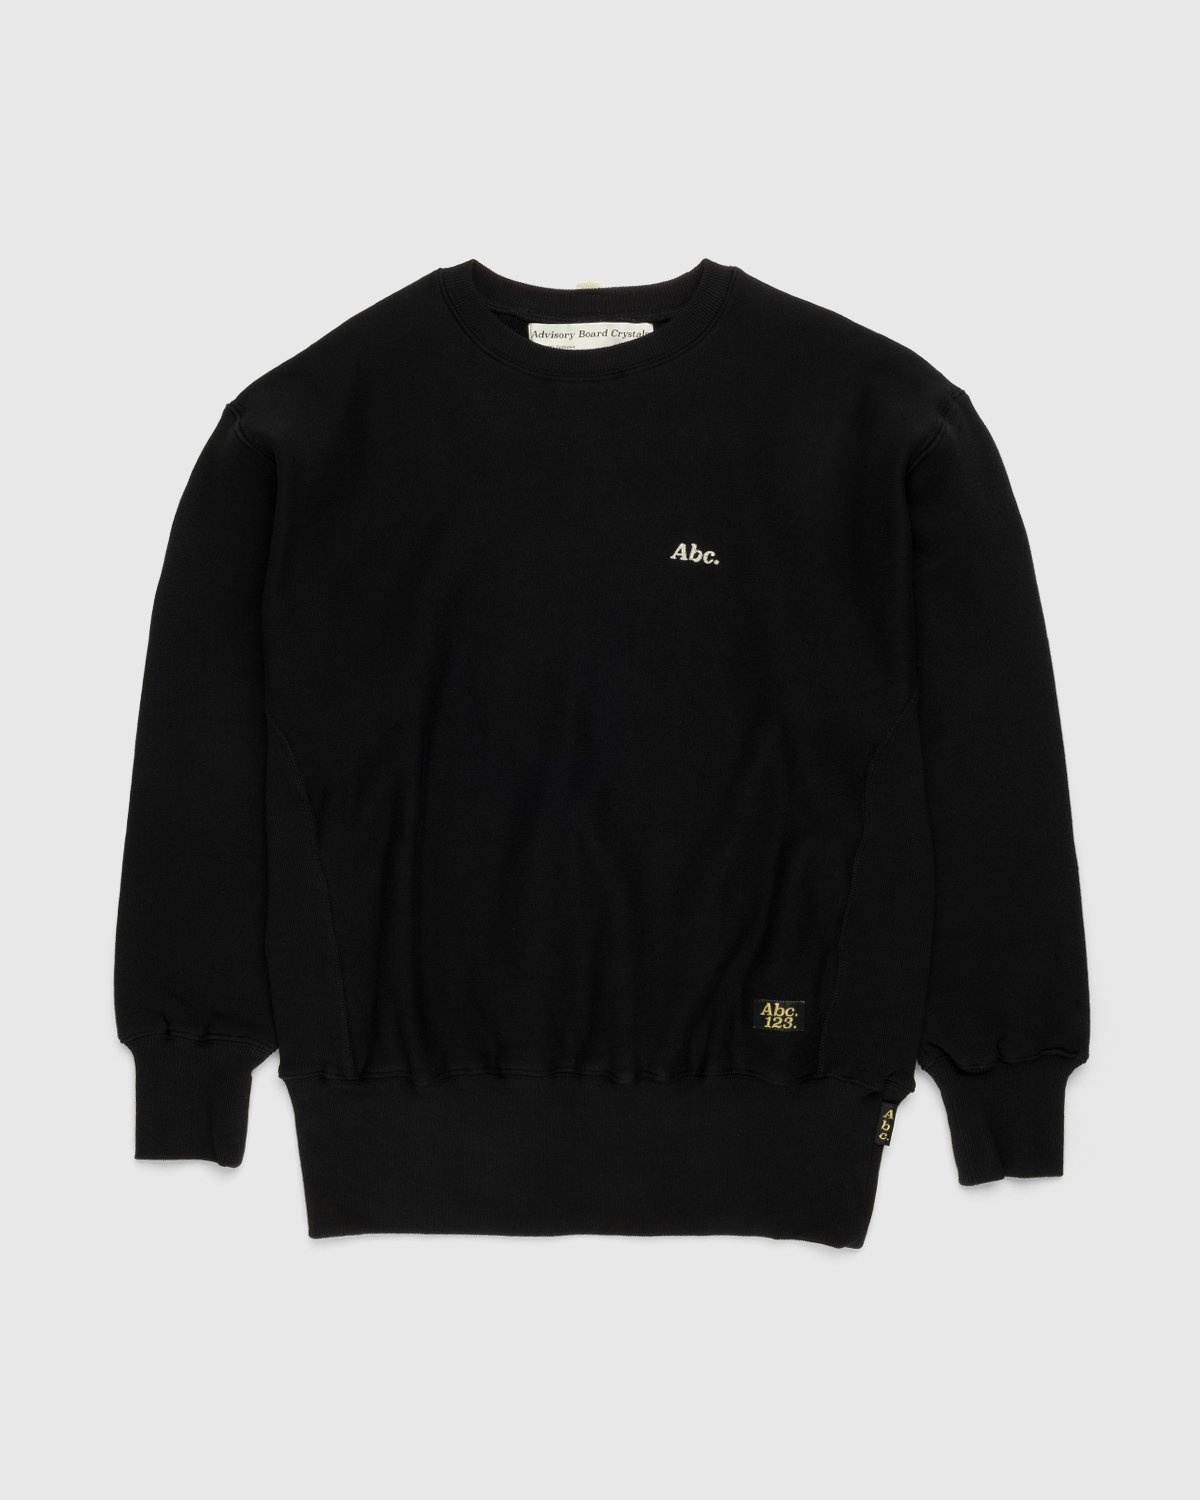 Abc. – French Terry Crewneck Sweatshirt Anthracite - Sweats - Black - Image 1